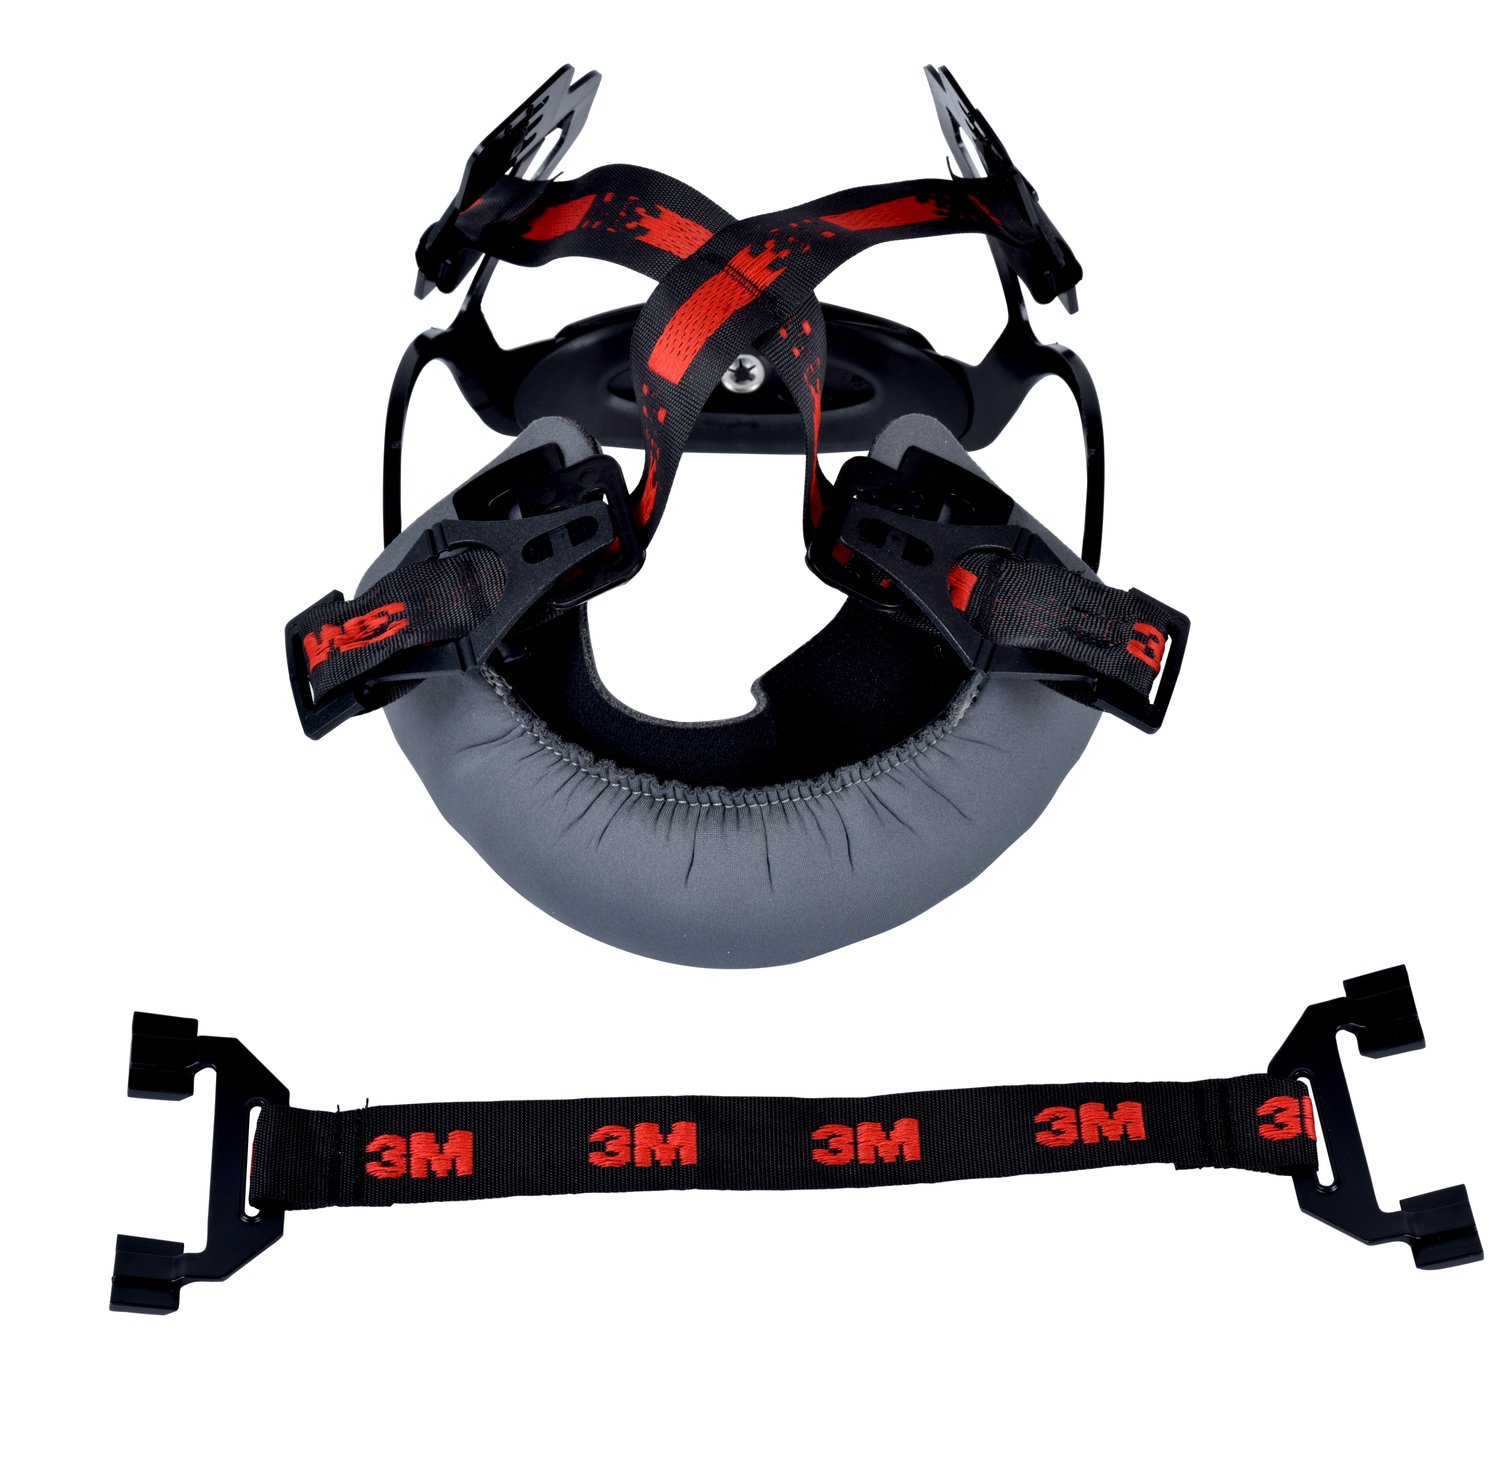 7100180703 - 3M X5-6PTSUS Replacement 6 Point Suspension for SecureFit Safety
Helmet X5000